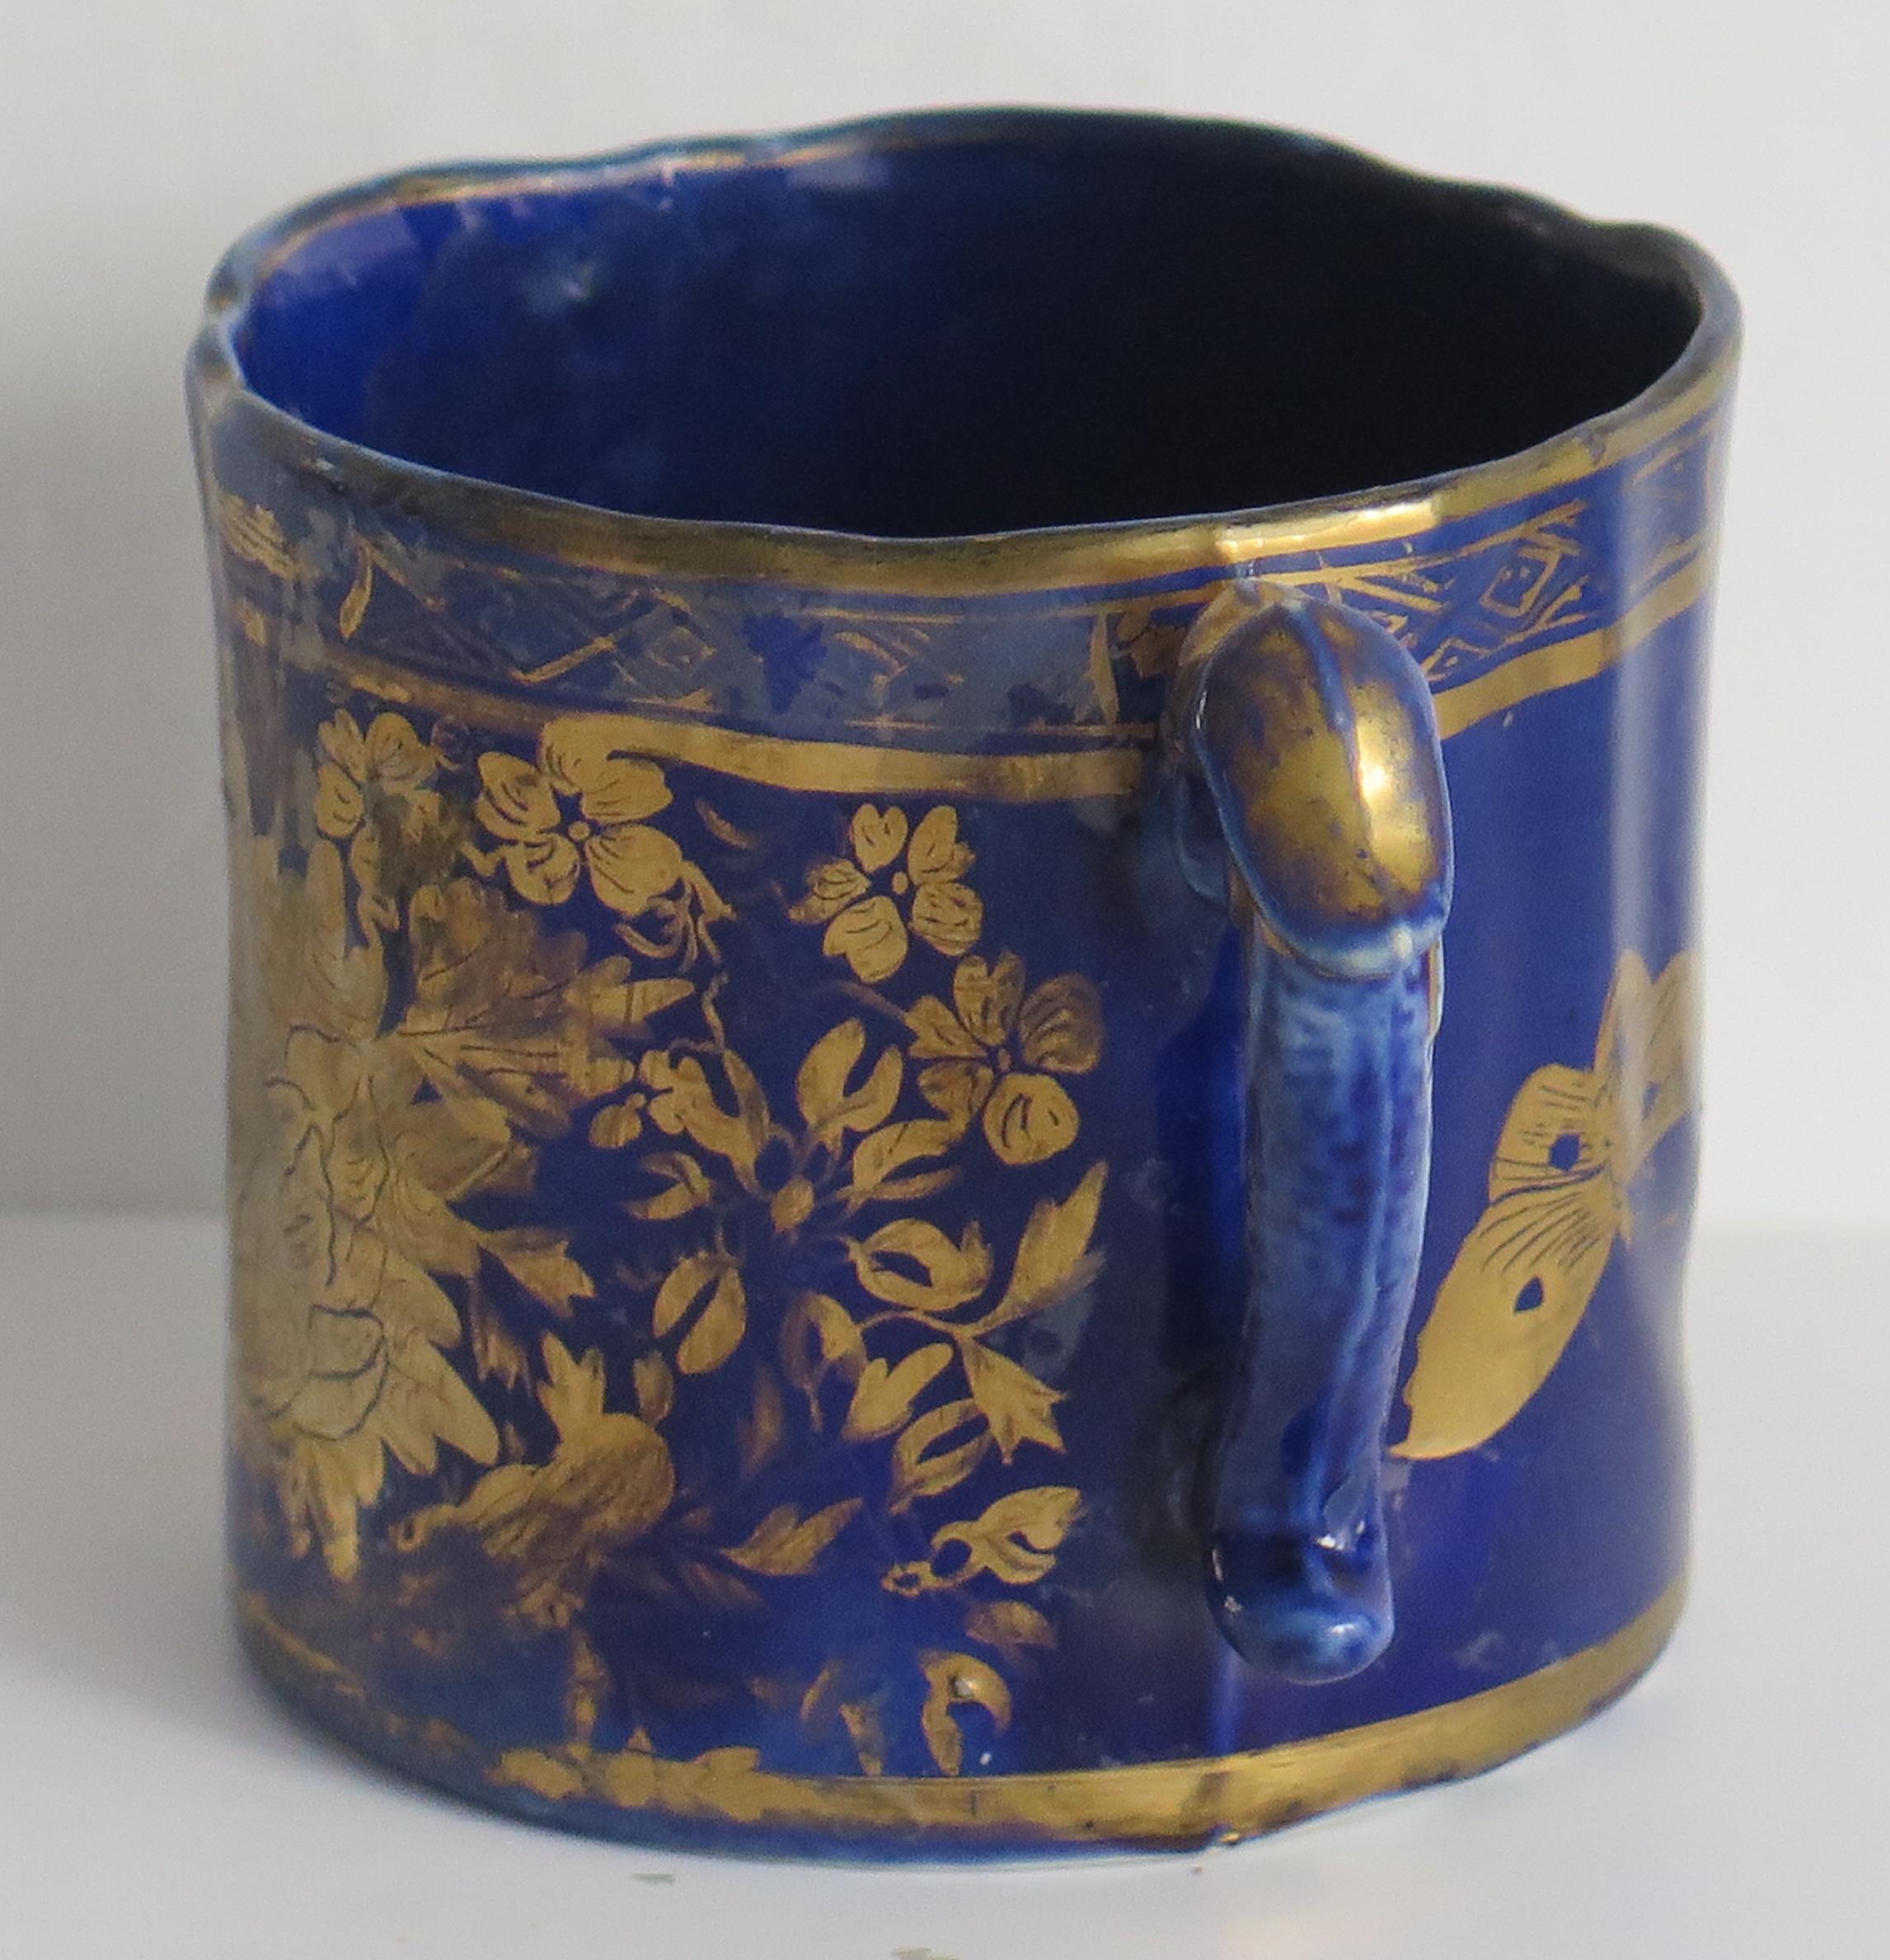 English Rare Early Mason's Ironstone Mug in Gold Posies & Butterflies pattern circa 1818